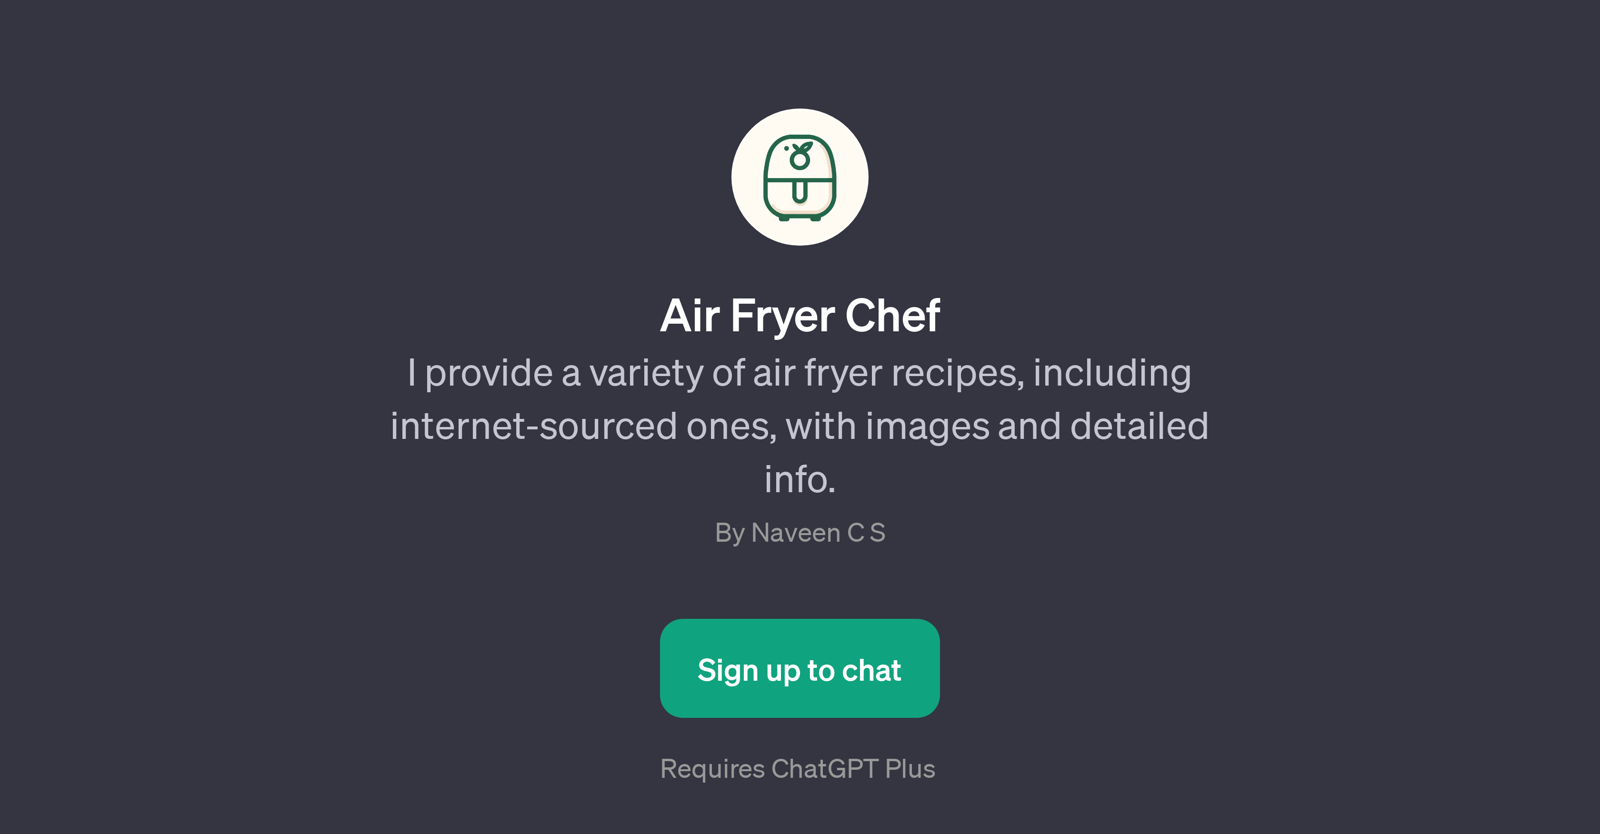 Air Fryer Chef website